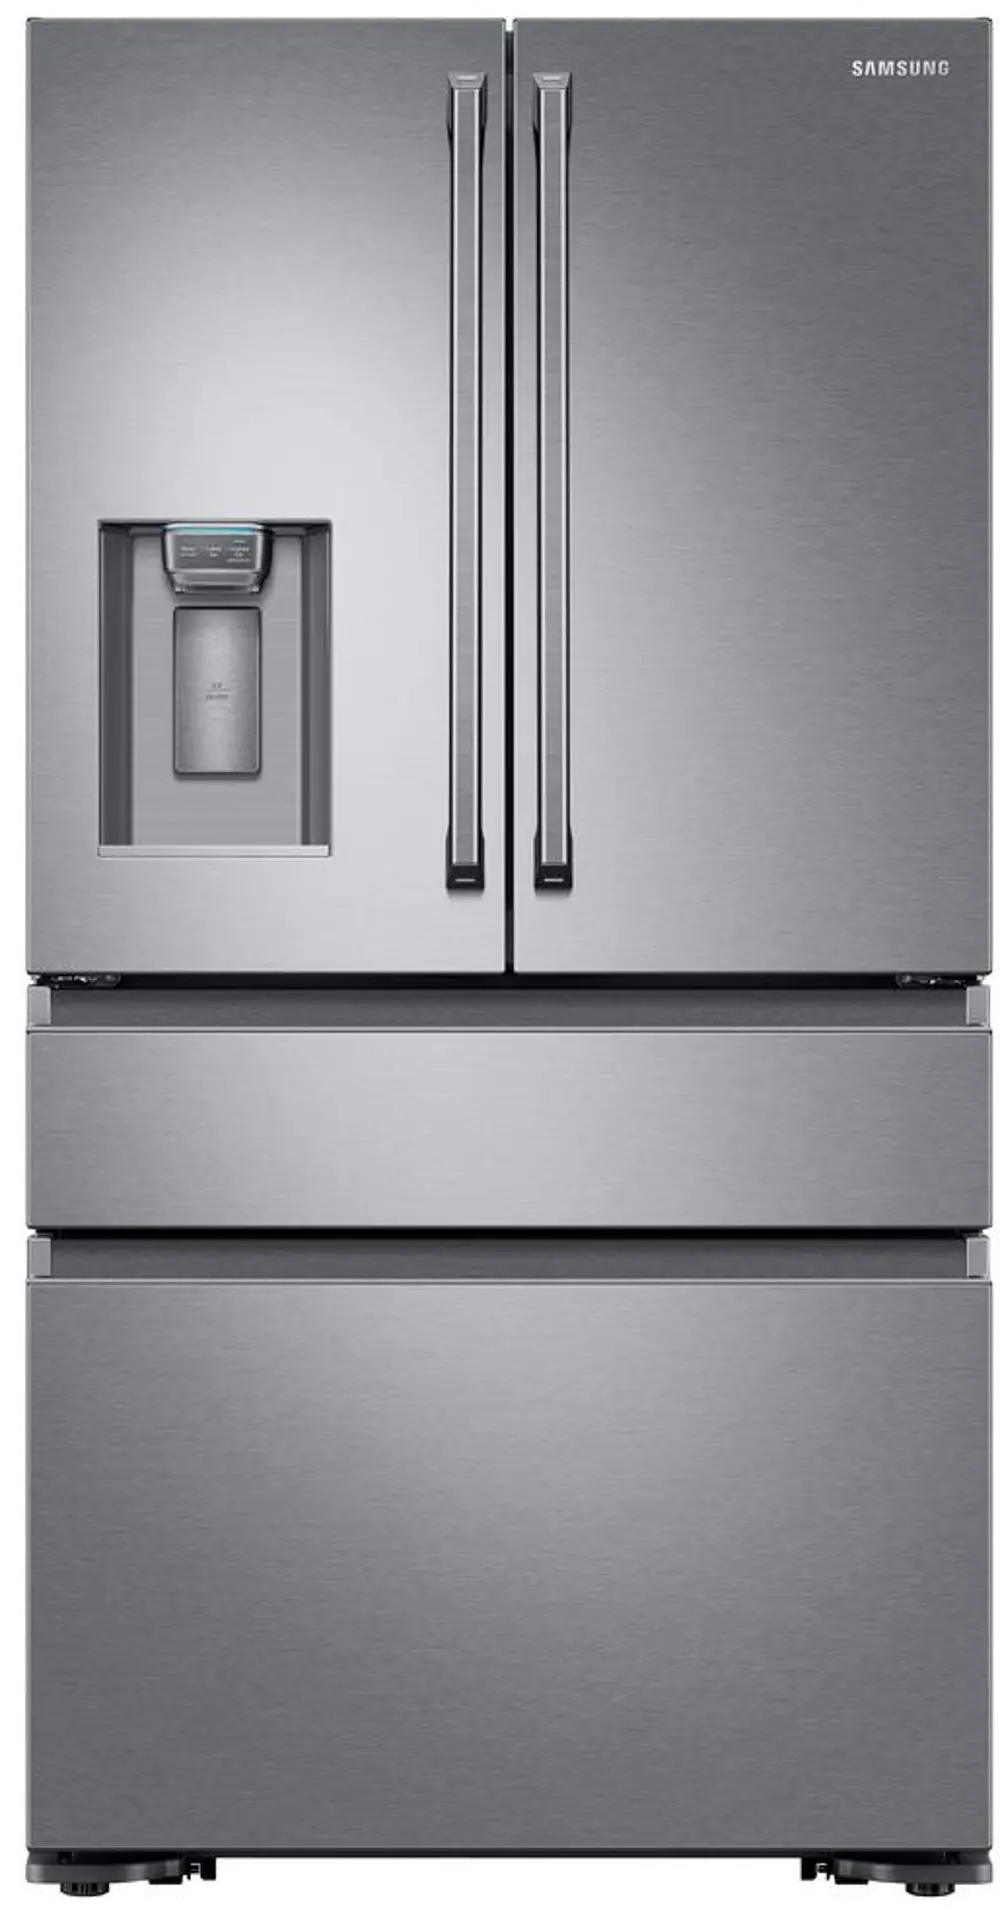 RF23M8090SR Samsung Counter Depth French Door Smart Refrigerator with FlexZone Drawer - 22.6 cu. ft., 36 Inch Stainless Steel-1